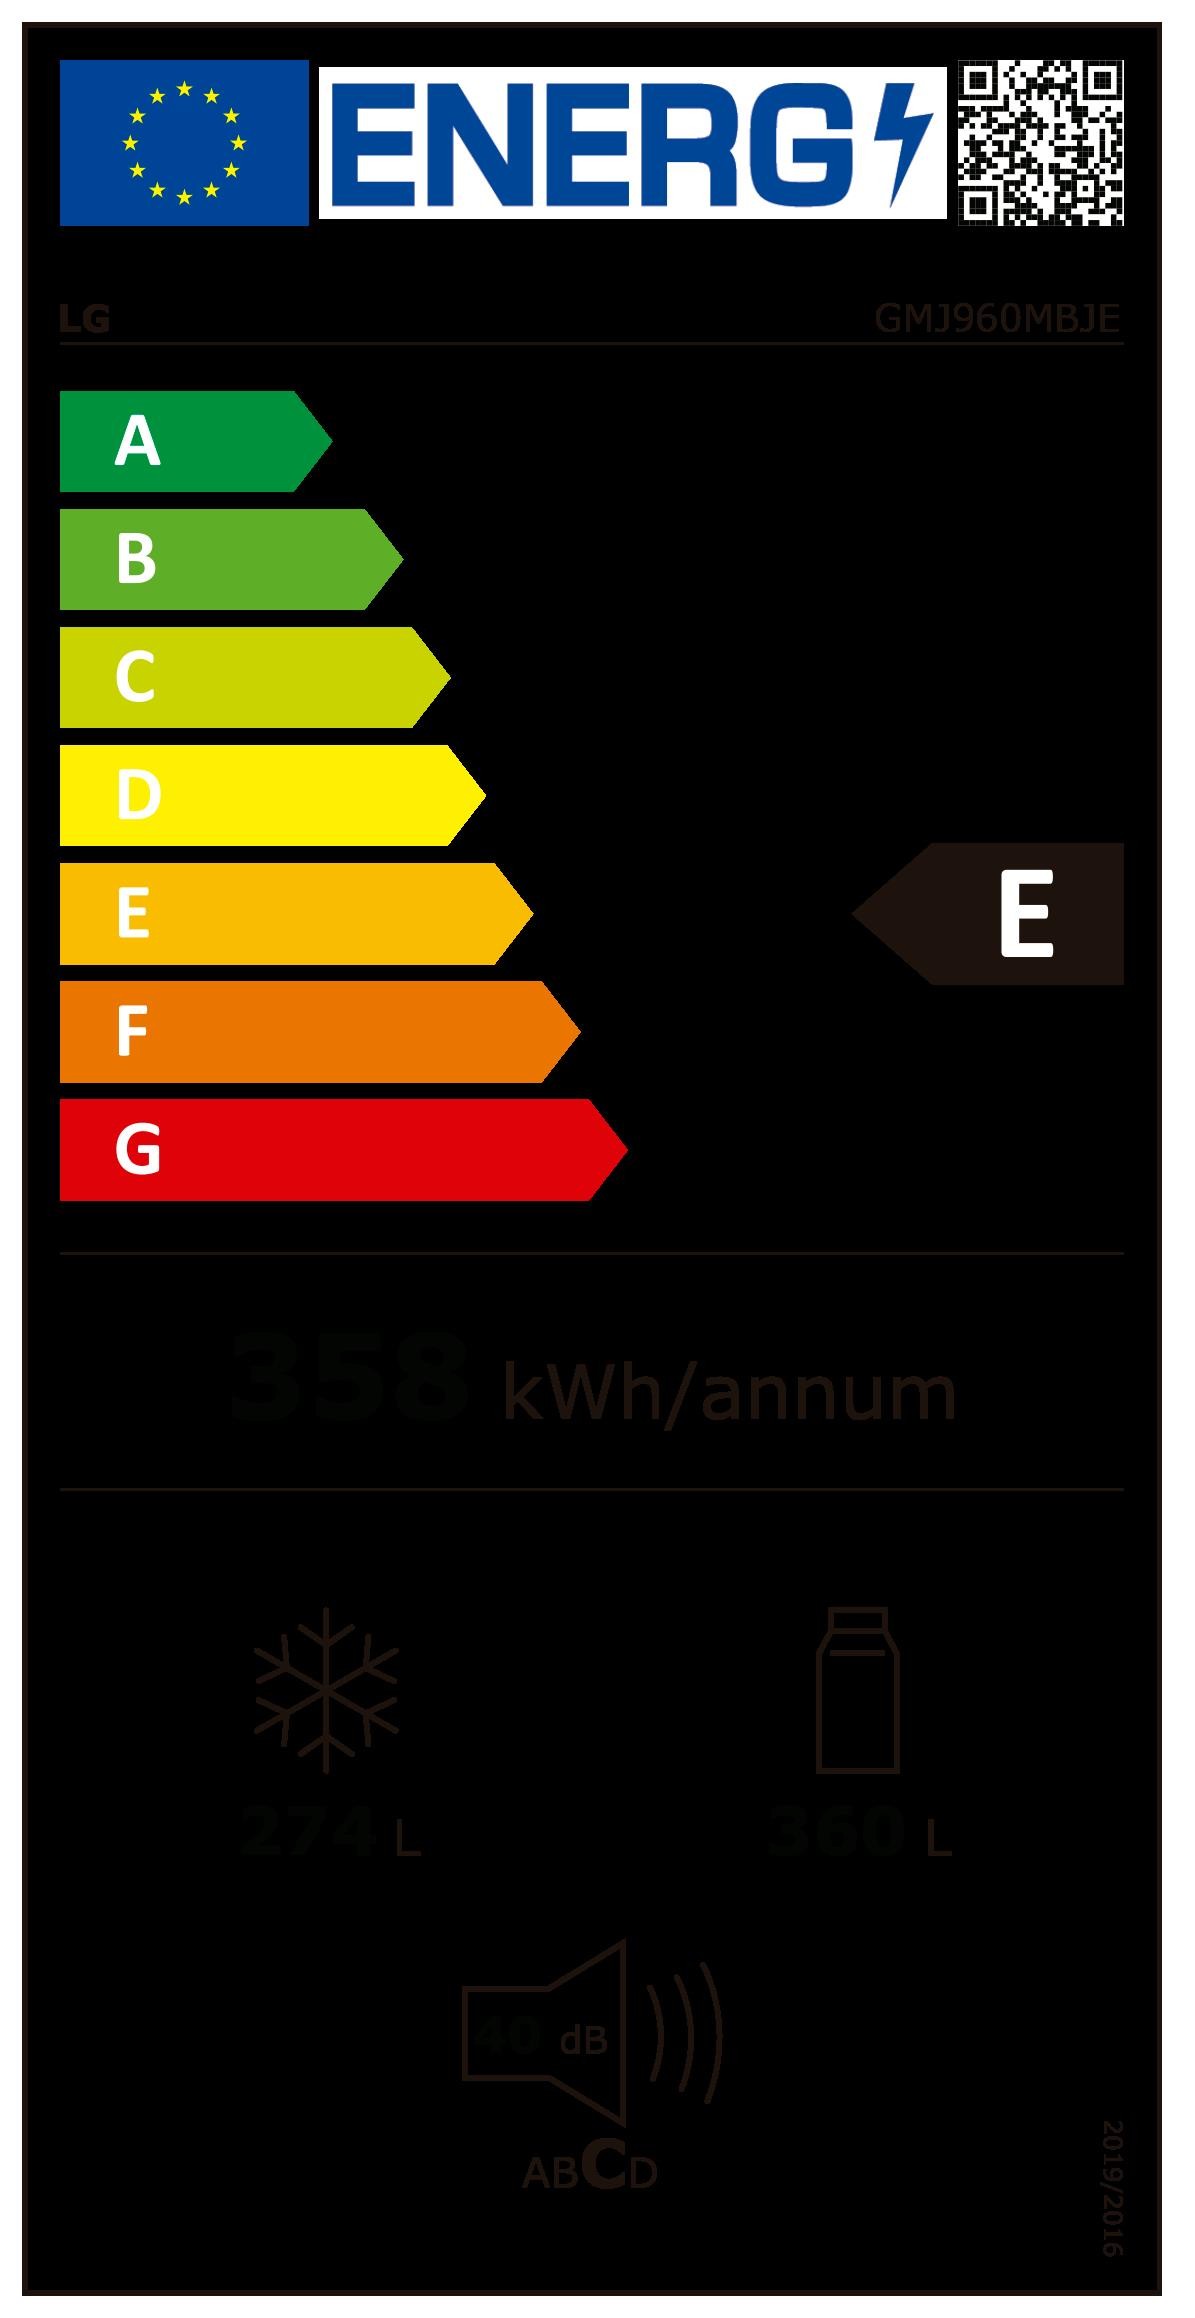 Etiqueta de Eficiencia Energética - GMJ960MBJE